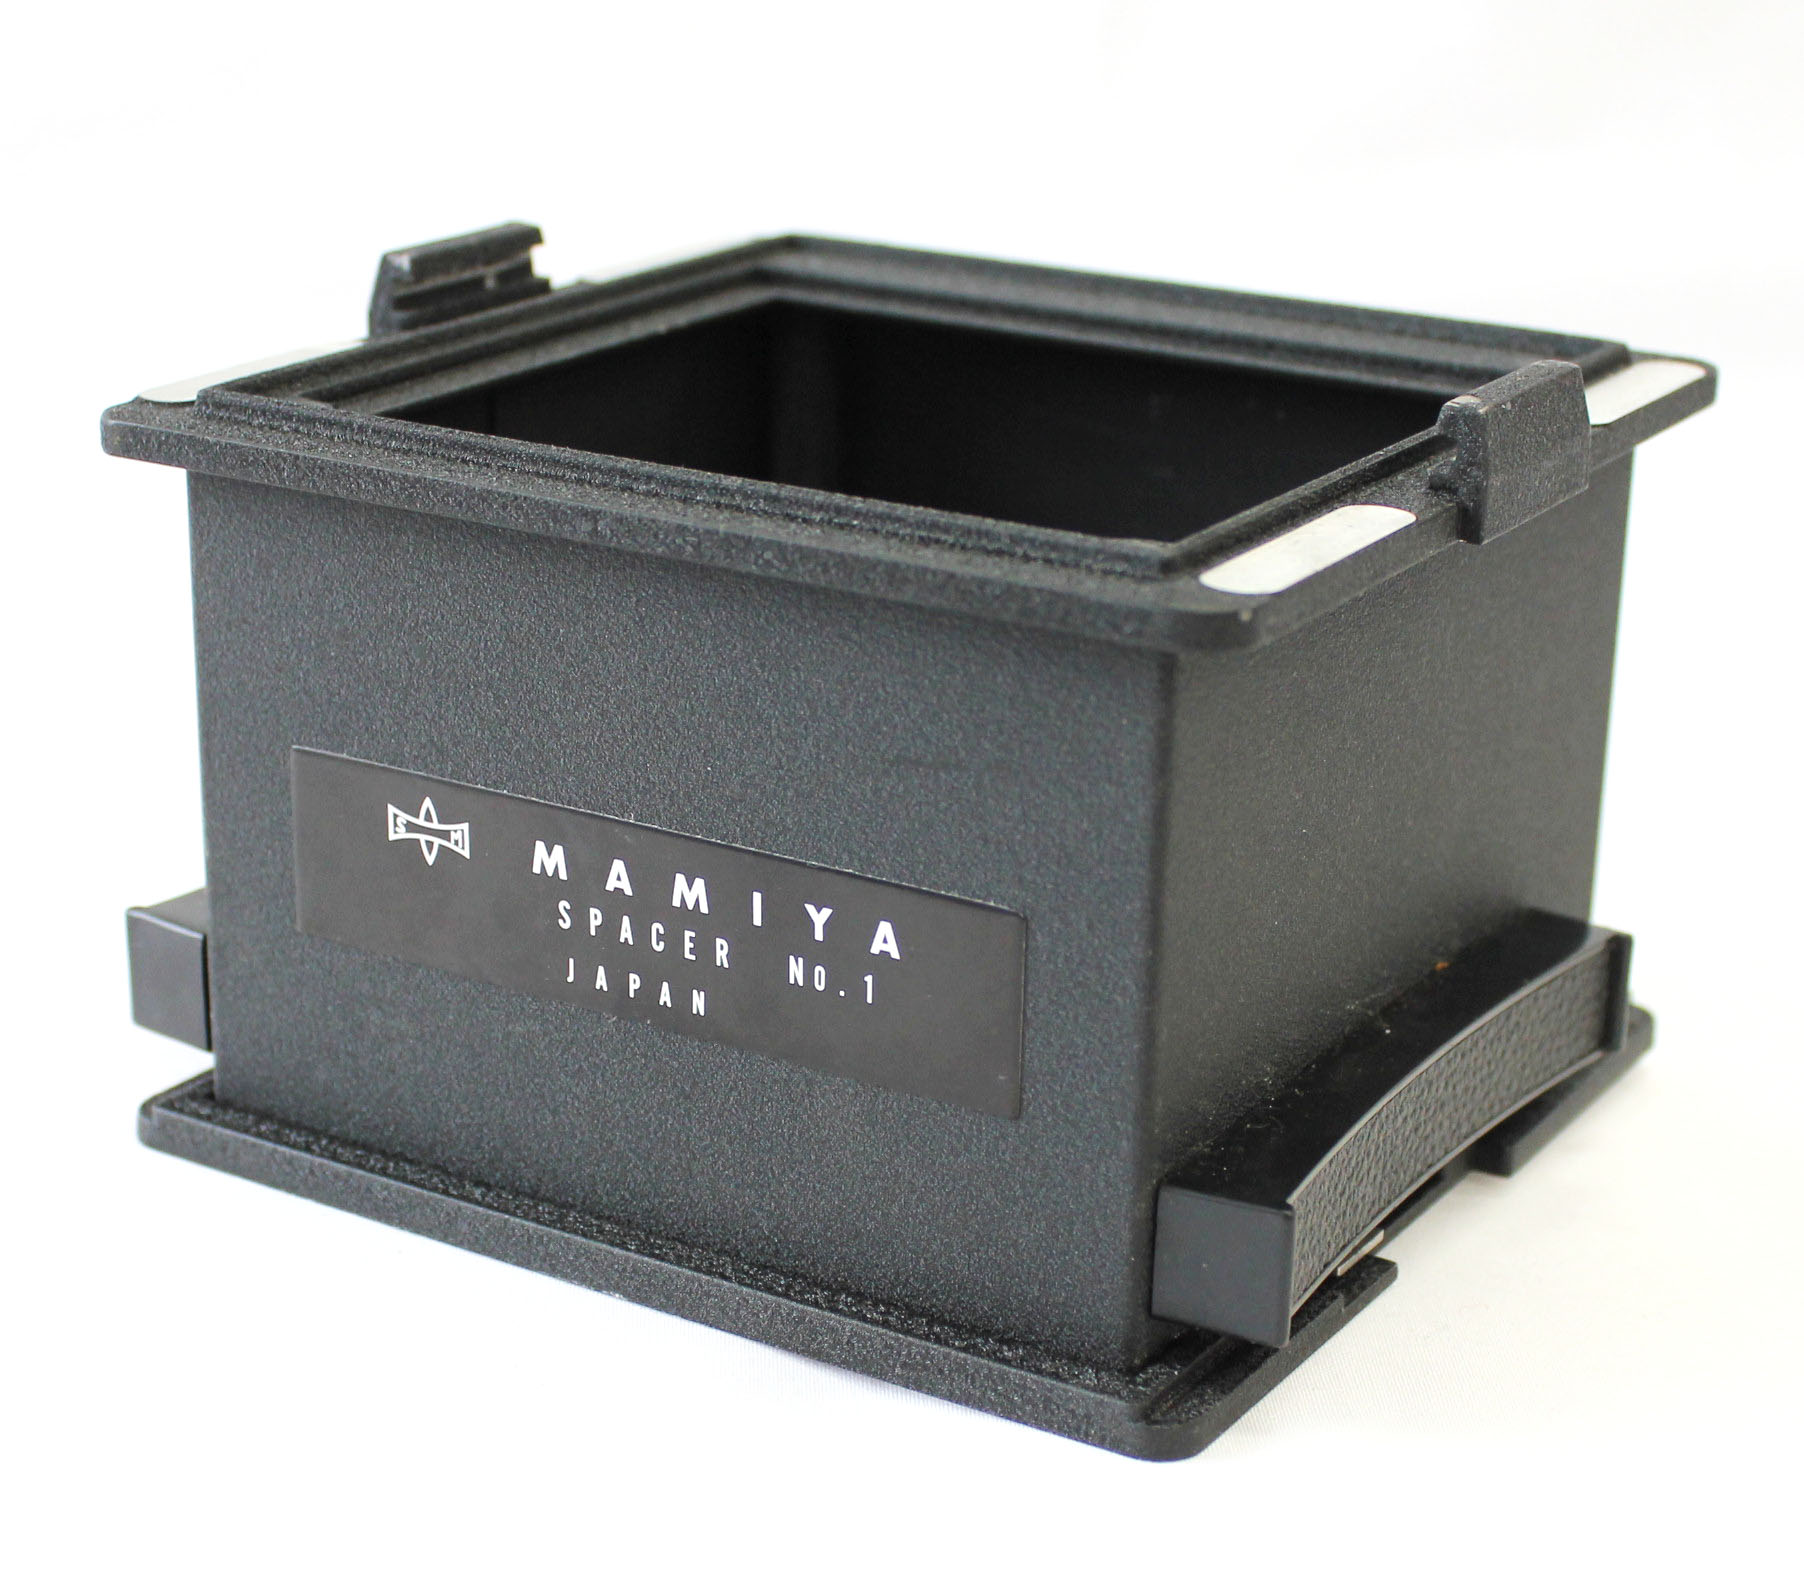 Japan Used Camera Shop | Mamiya Spacer No.1 for Universal Press Super 23 from Japan